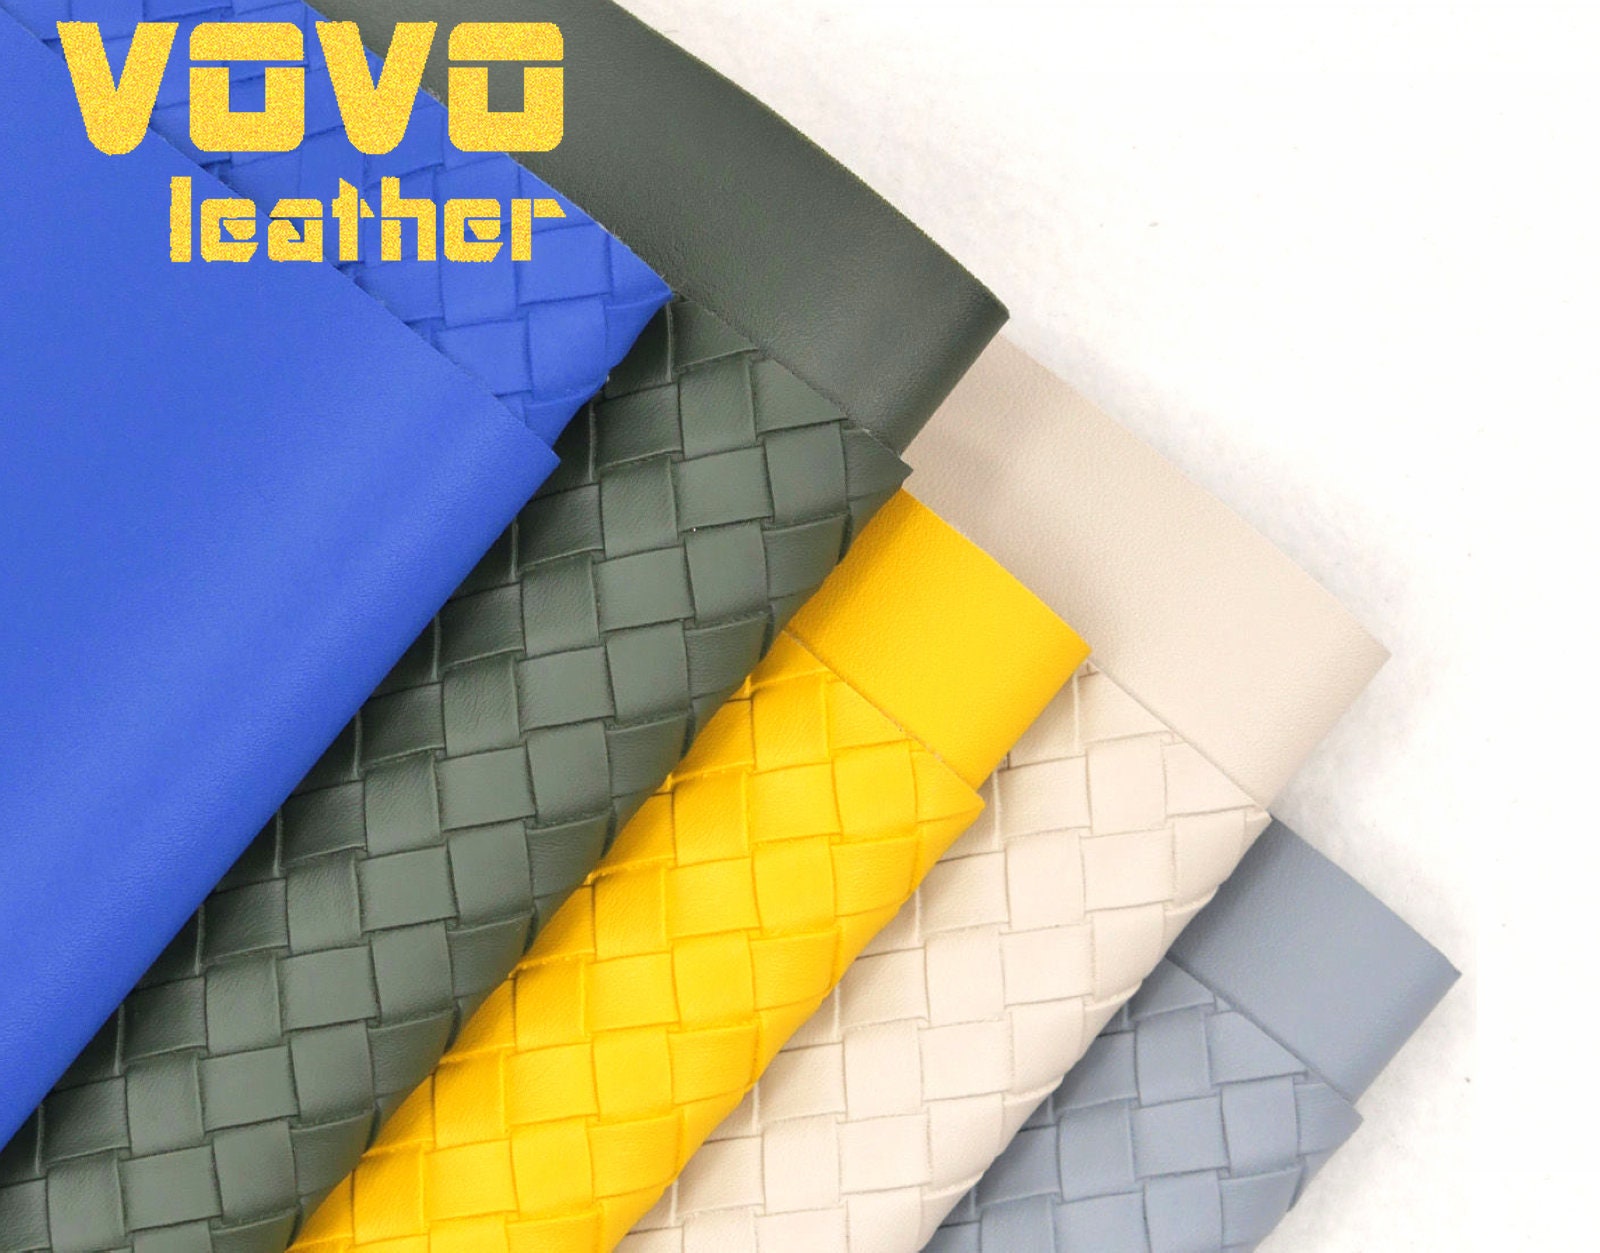 LV Louis Vuitton Designer Classic PVC Artificial Leather Fabric (8801) -  FabrikAholic